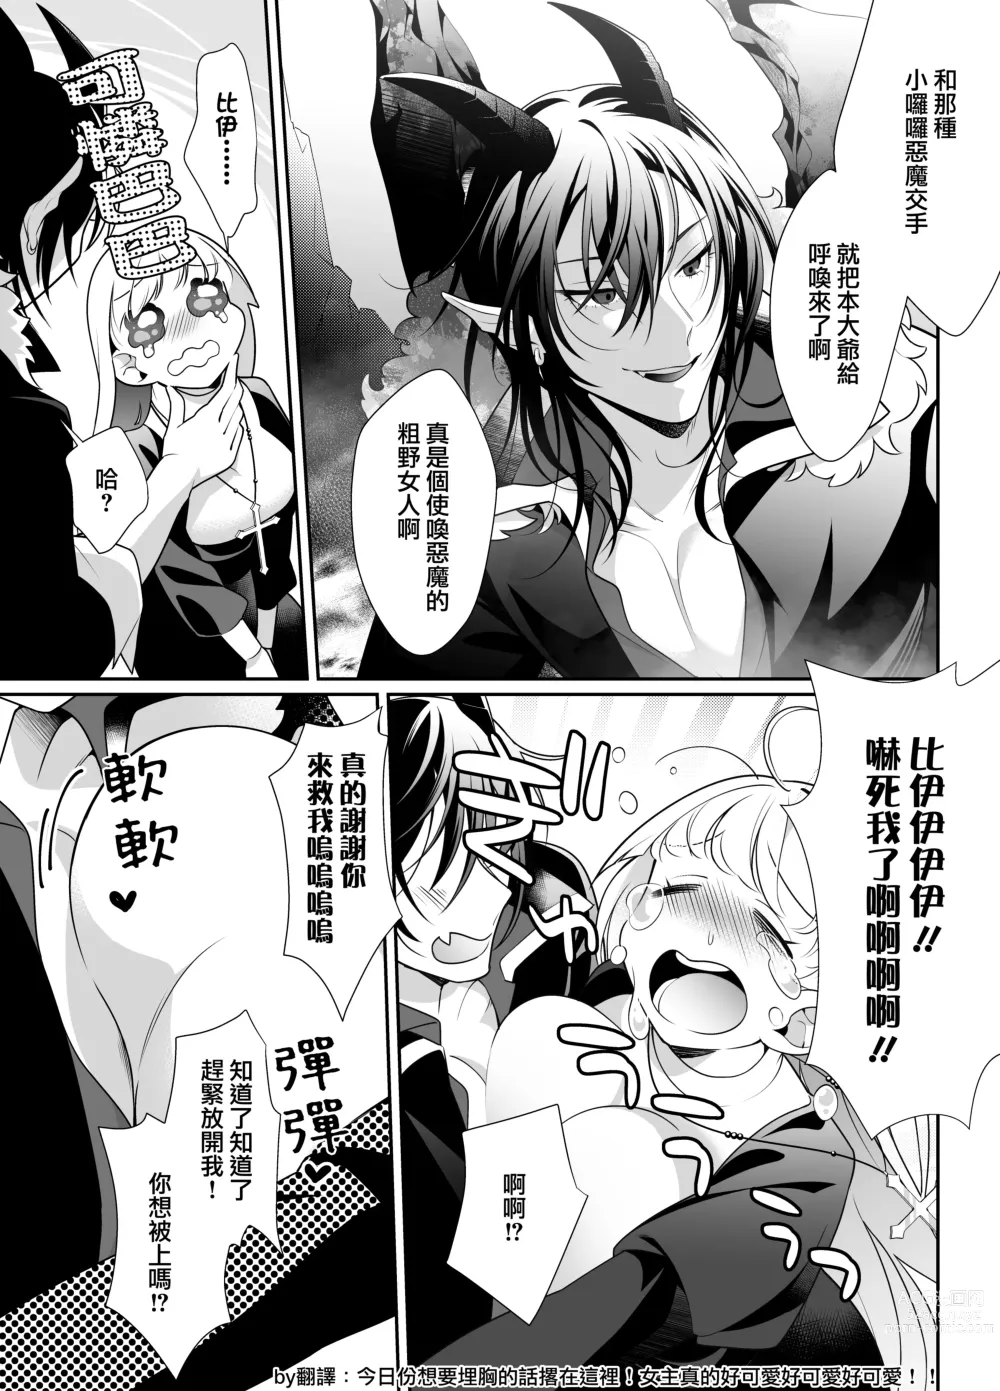 Page 6 of doujinshi 作为见习驱魔师的我因和坏心眼恶魔签订契约的强制性爱